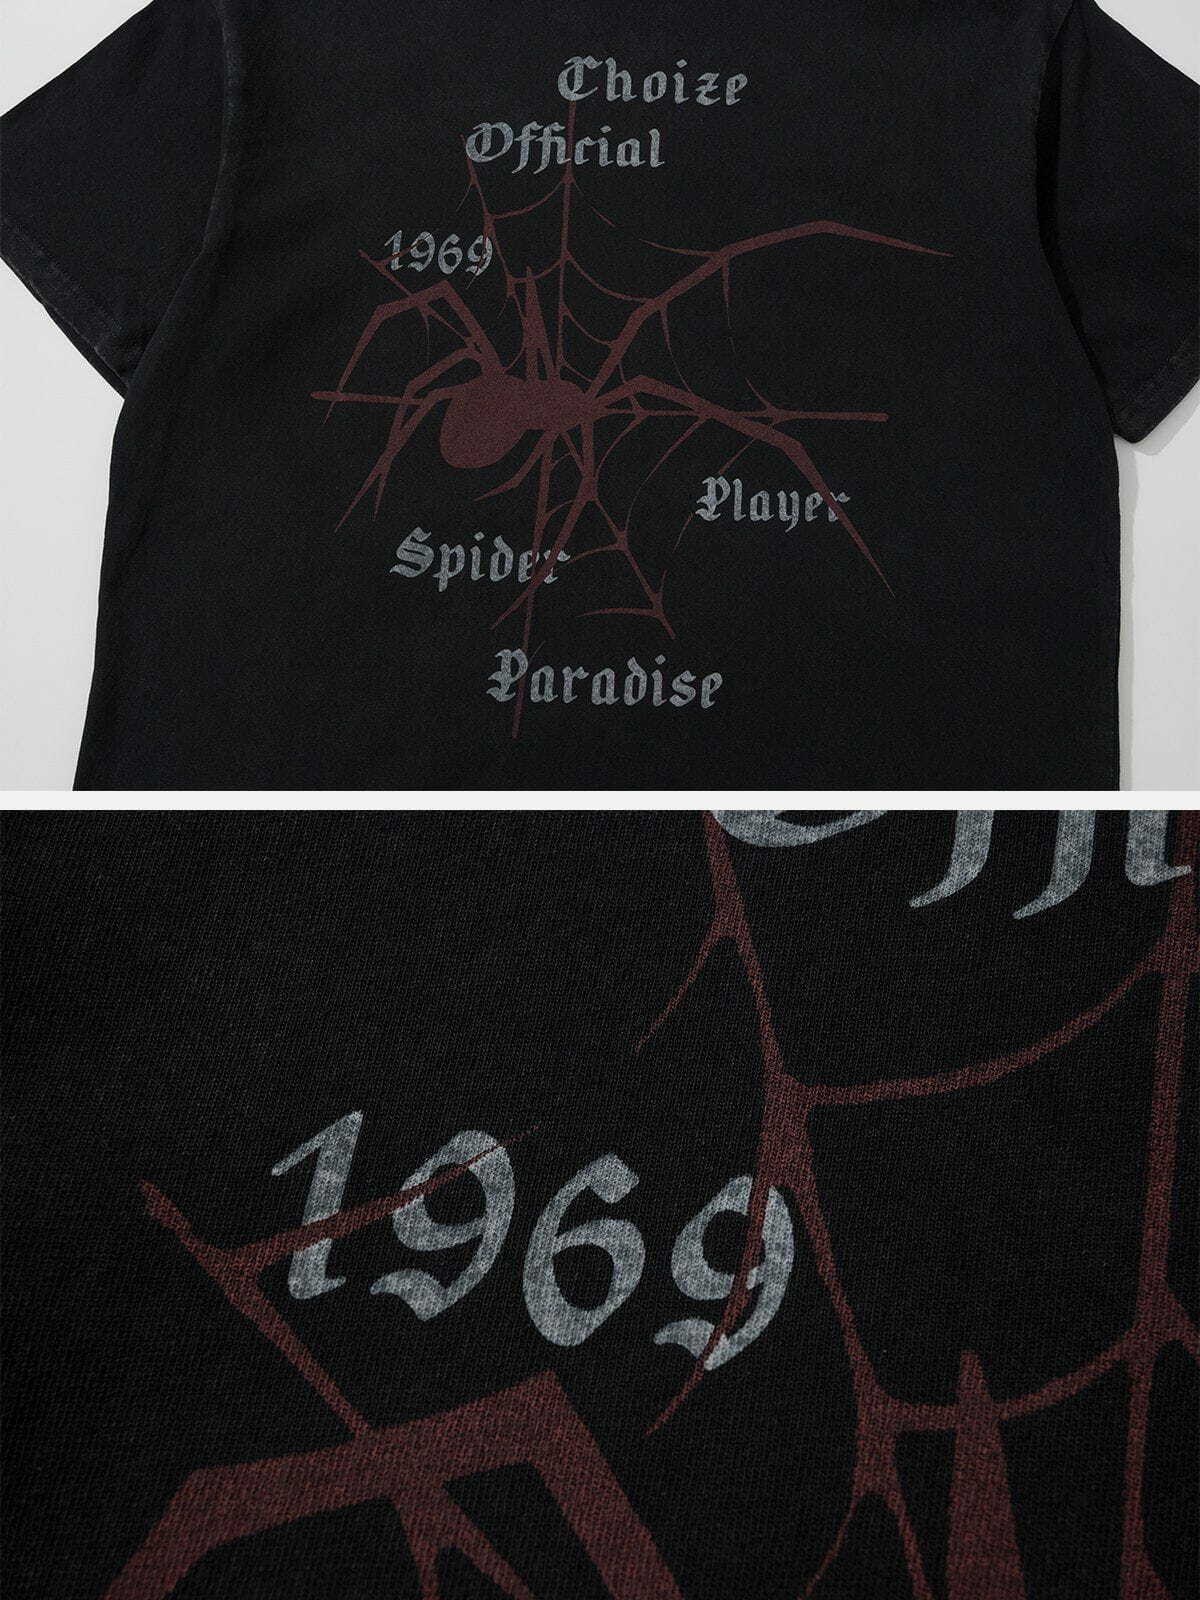 youthful spider print tee edgy retro streetwear shirt 4467